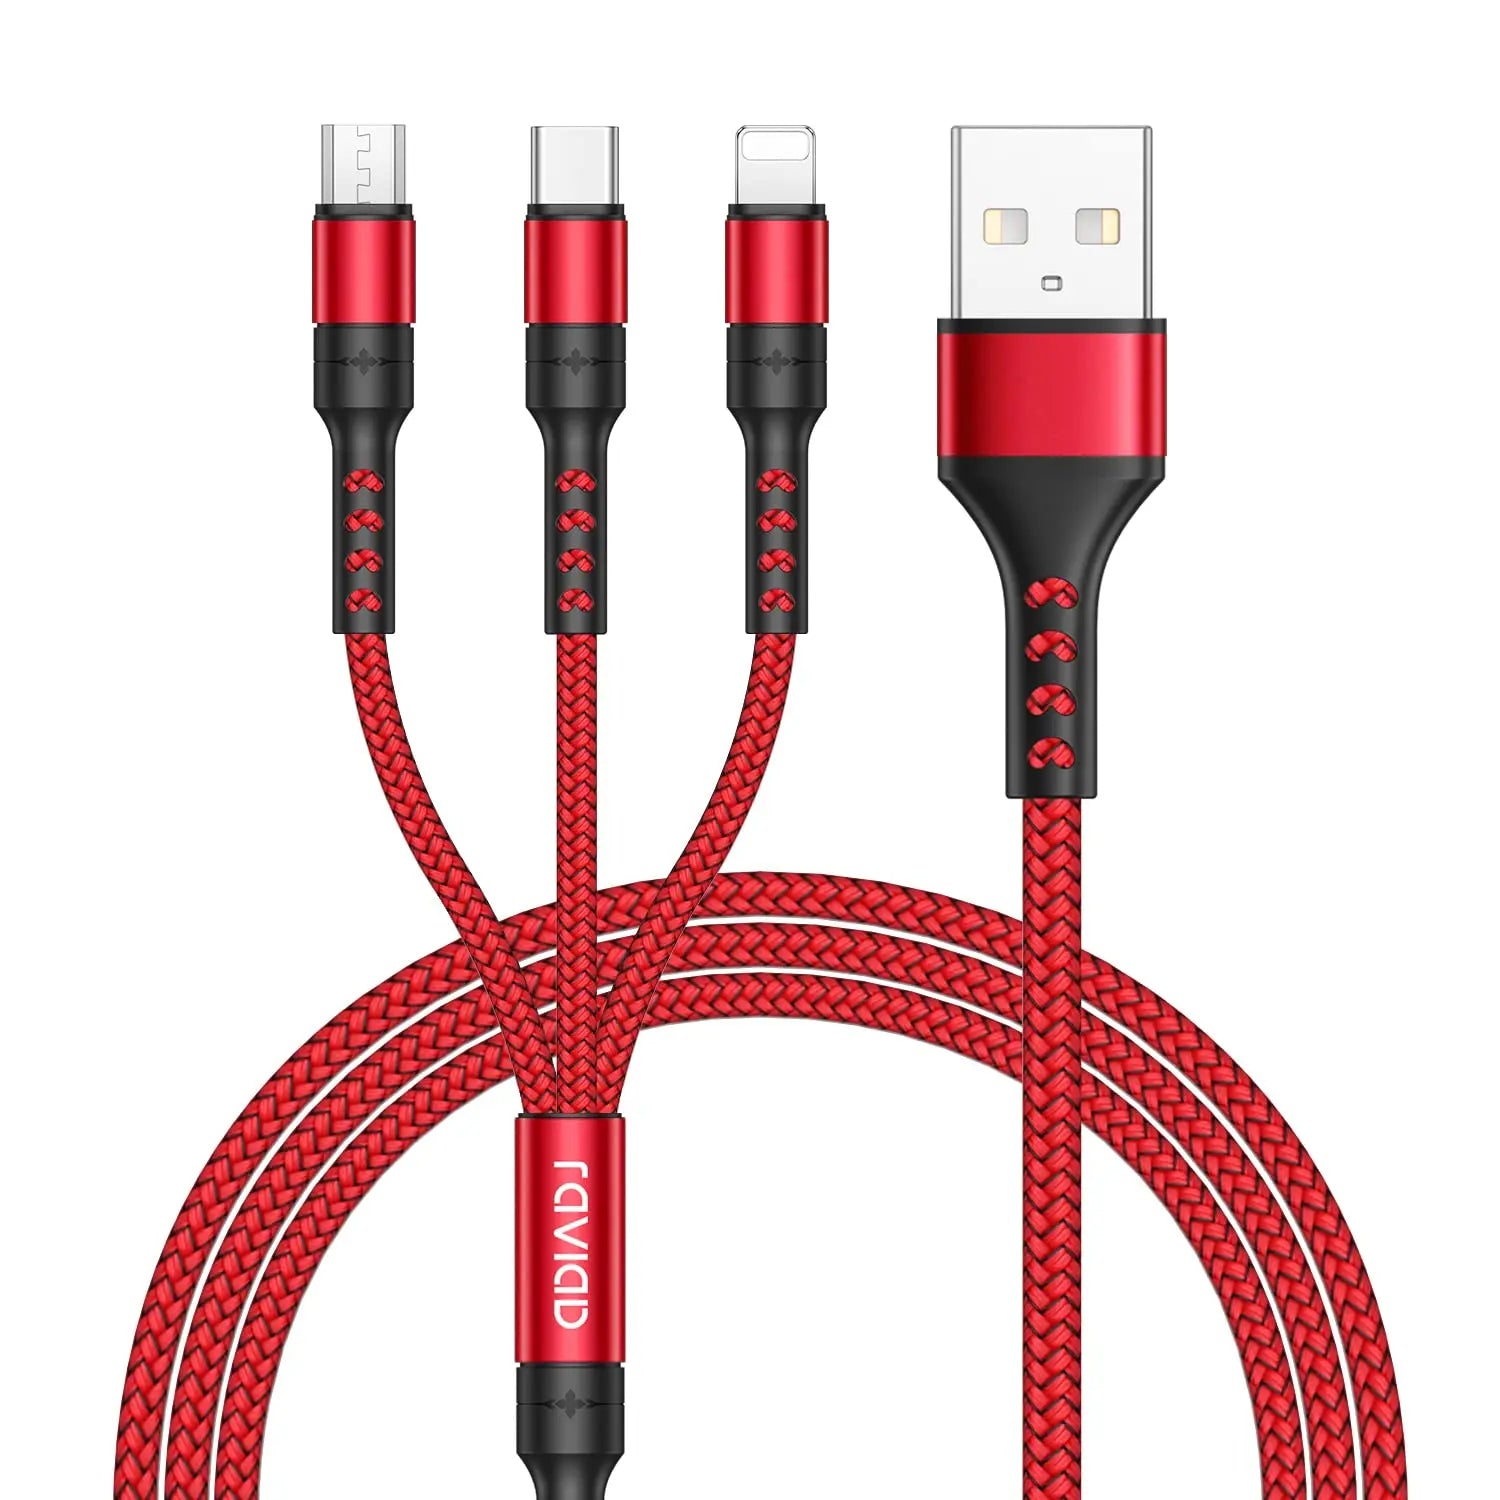 Câble micro USB universel 10-en-1, multi-chargeur, cordon de